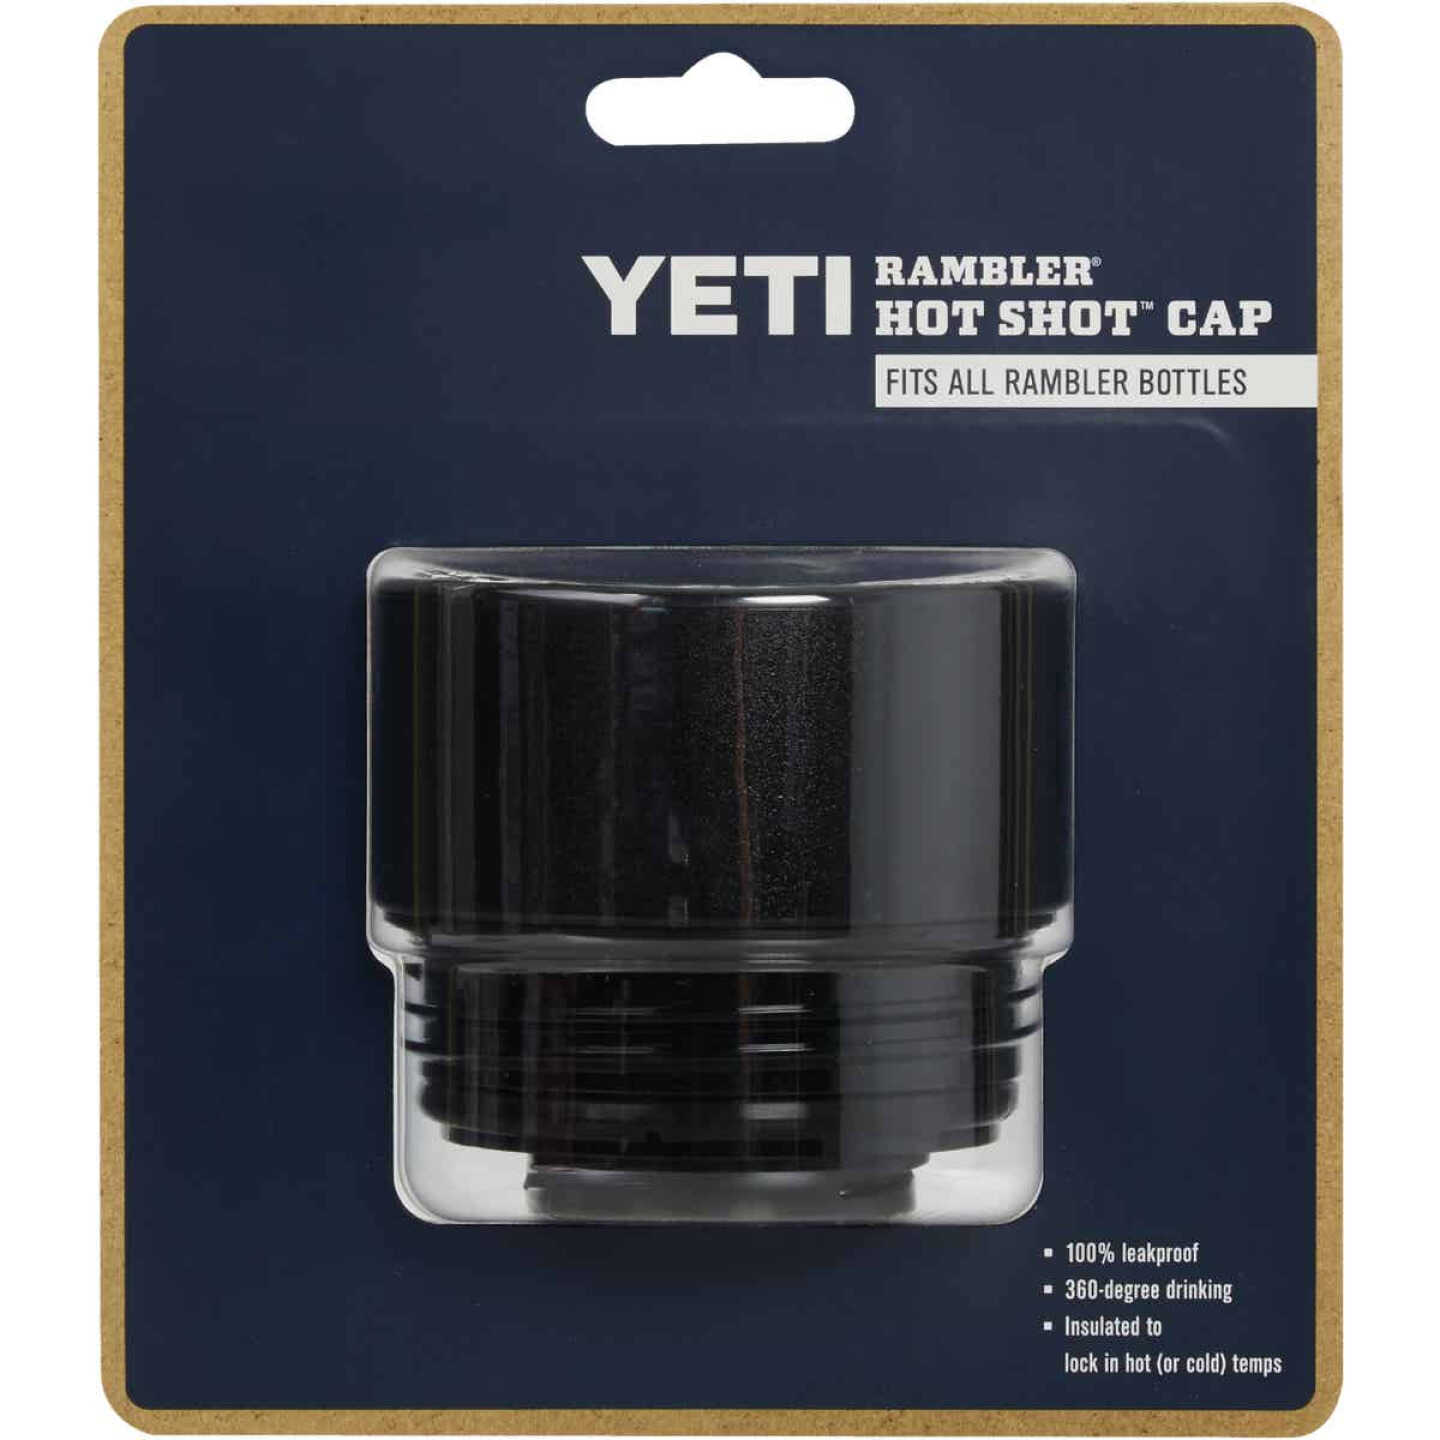 Yeti Rambler Hot Shot Cap Fits all Rambler Bottles New Package